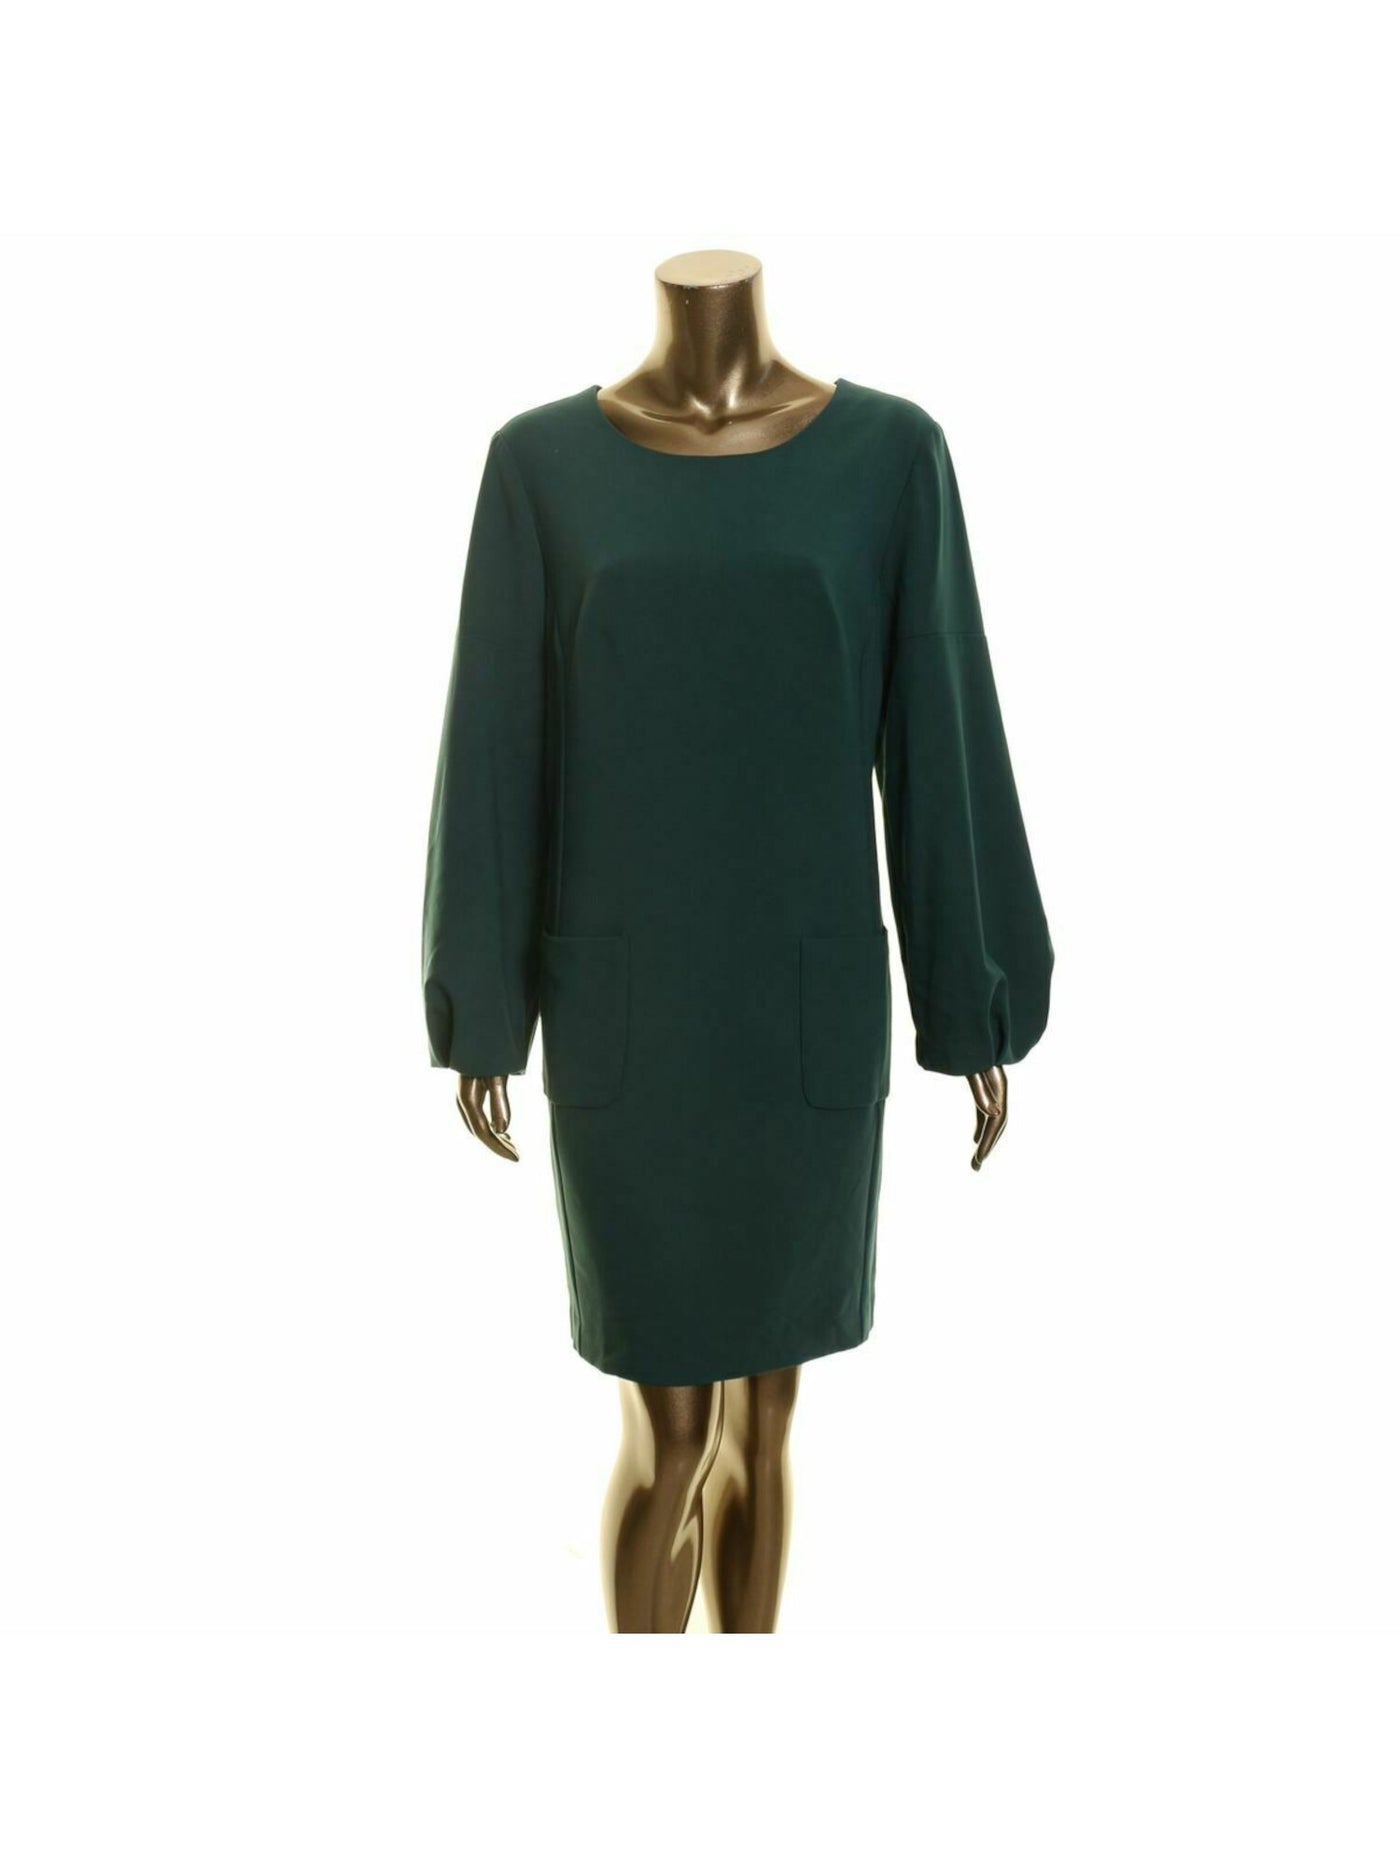 TRINA TURK Womens Green Pocketed Long Sleeve Jewel Neck Above The Knee Evening Shift Dress 10